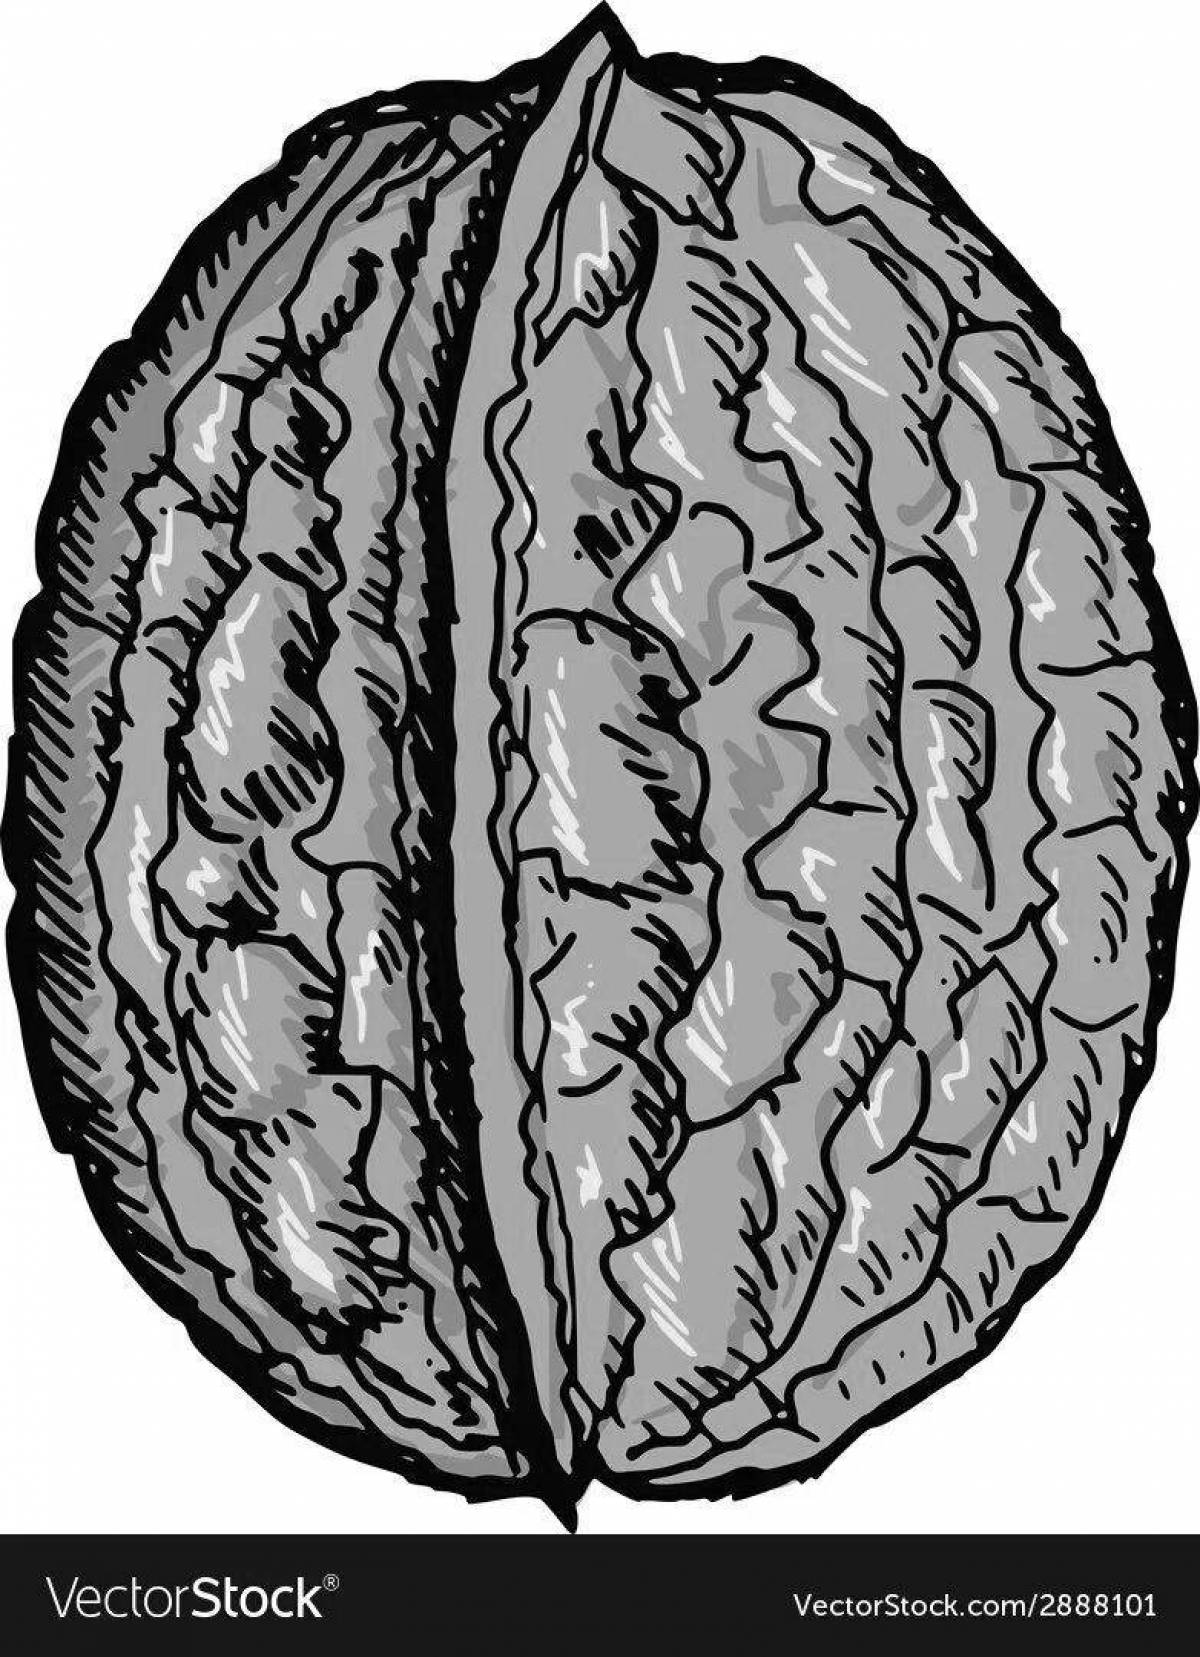 Раскраска орехи – арахис и фундук – Развивающие иллюстрации